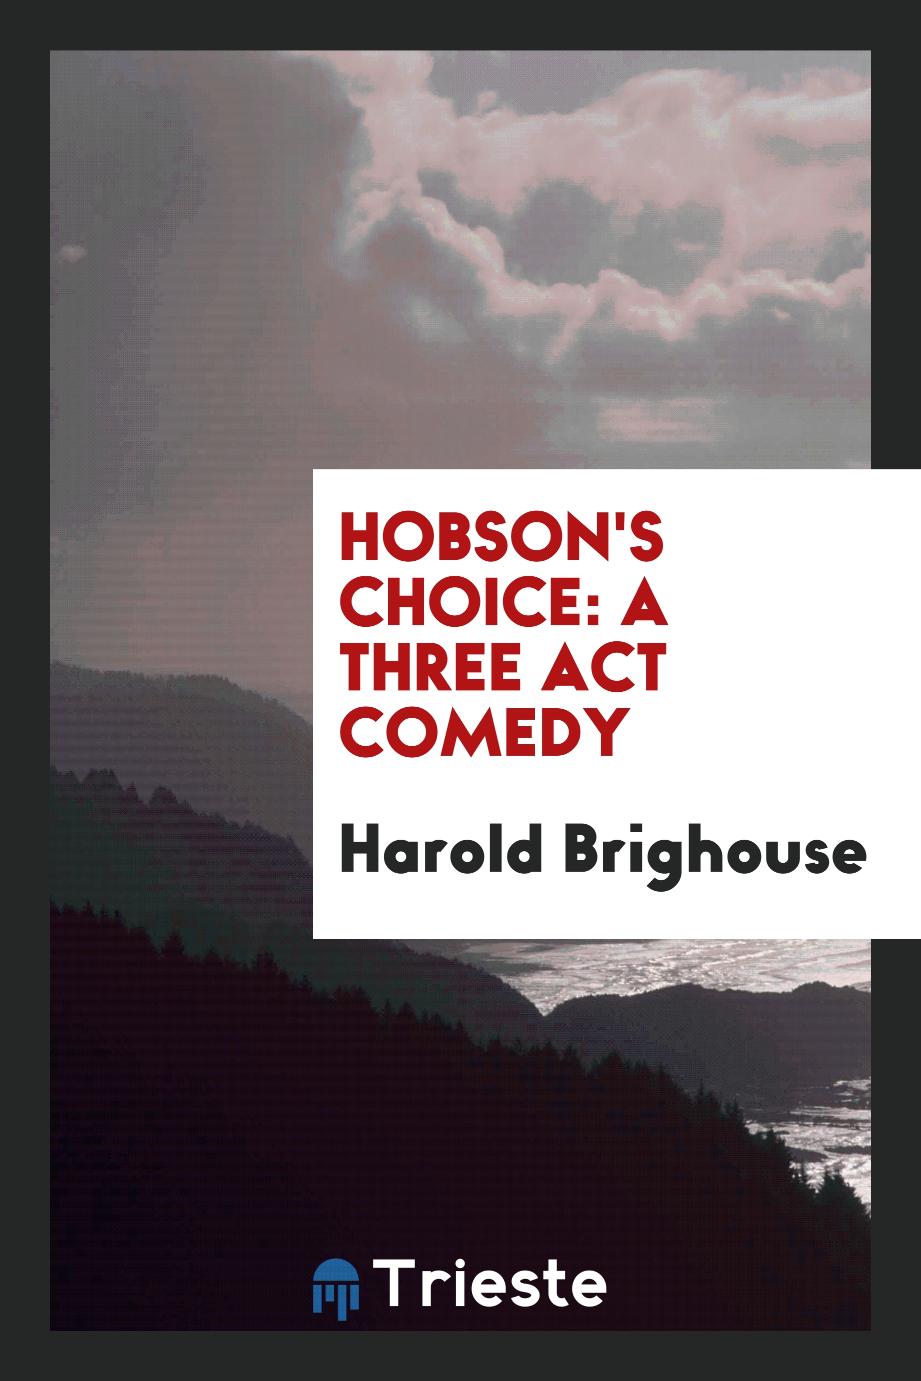 Harold Brighouse - Hobson's choice: a three act comedy